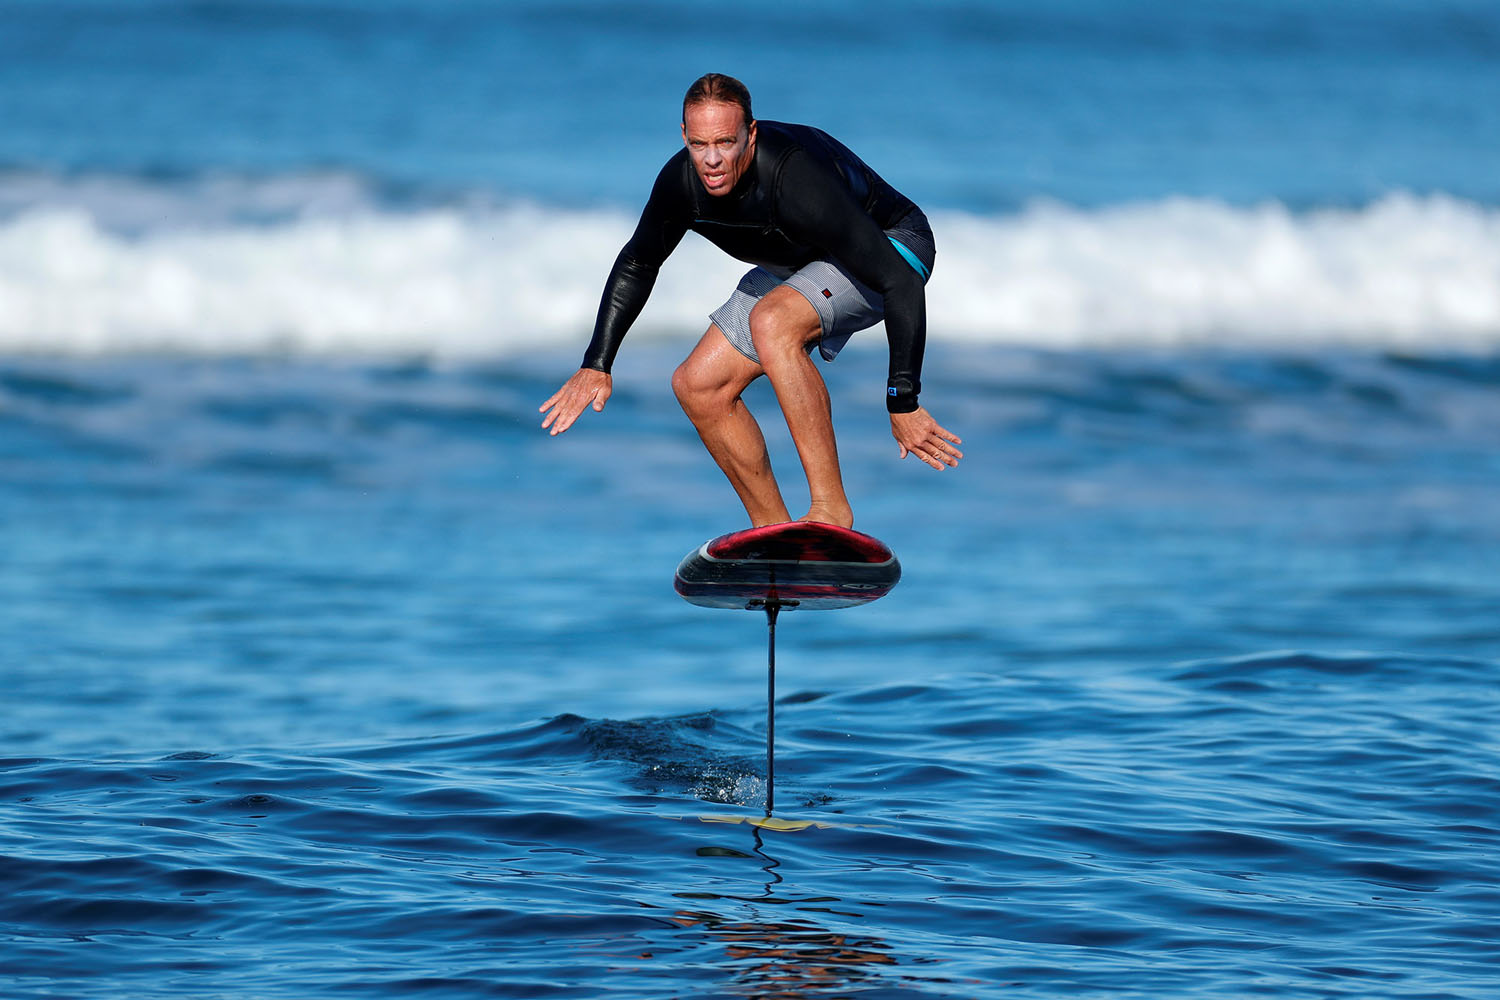 Chuck Patterson rides his foil board off the coast of Del Mar, California, February 3, 2018 (Mike Blake, Reuters)